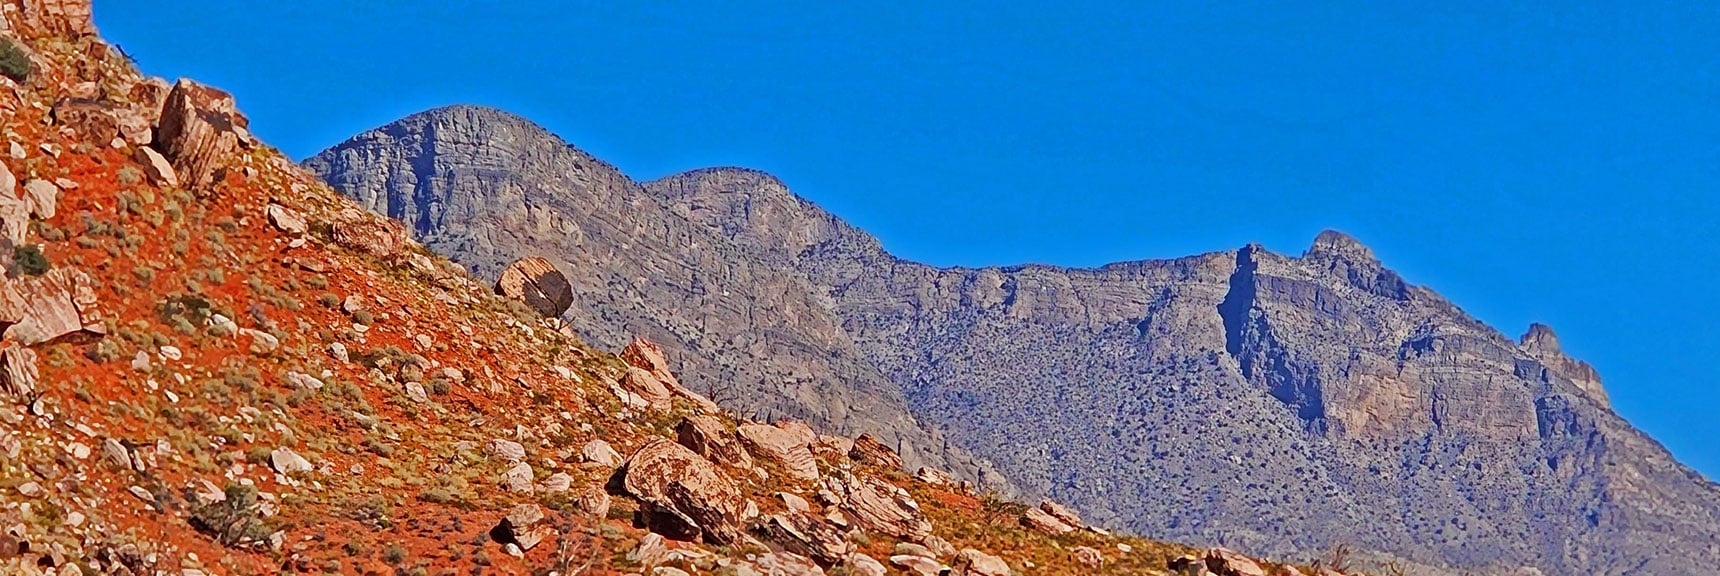 Turtlehead Peak (Left) with Damsel Peak Behind (Right) | Rock Climber Observations | Pine Creek Canyon | Rainbow Mountain Wilderness, Nevada